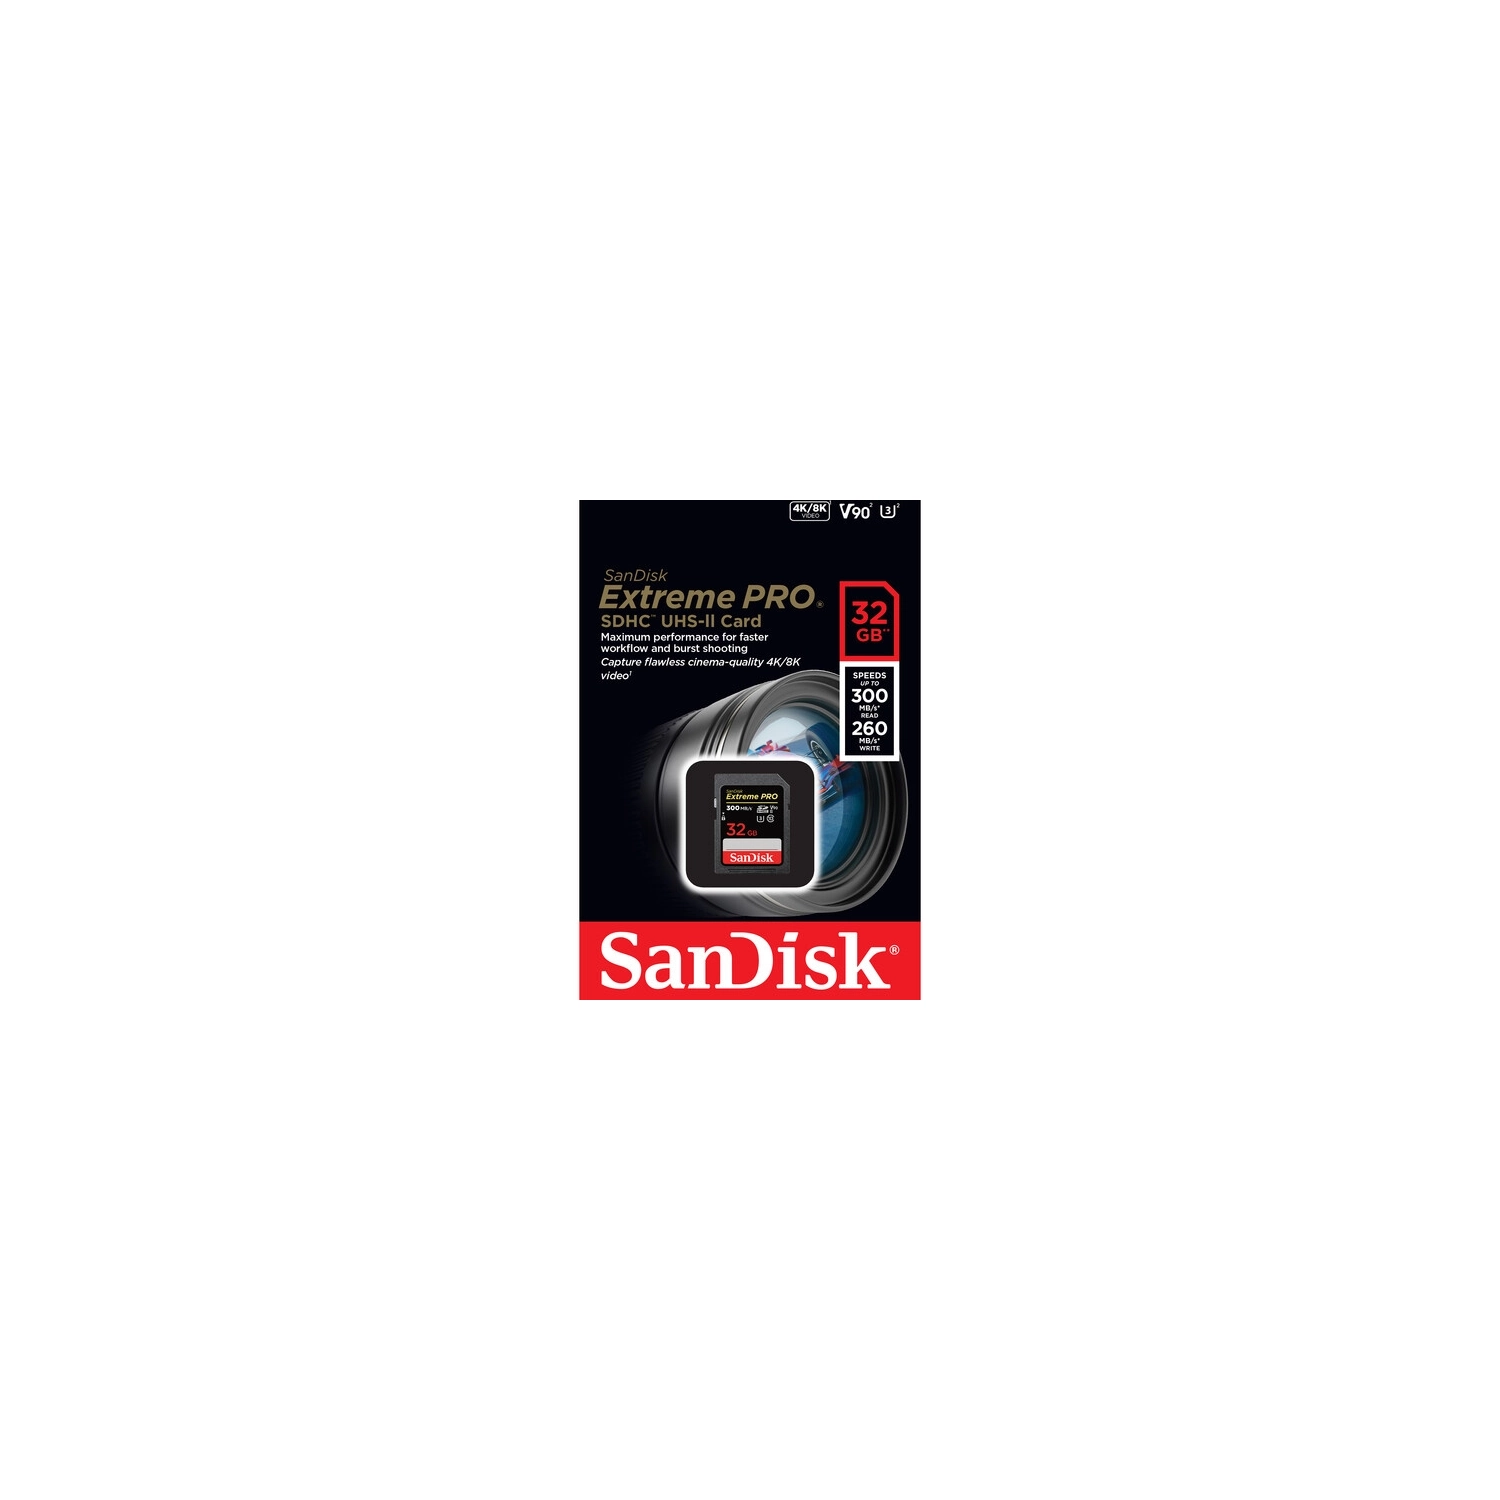 Sandisk Extreme Pro SD UHS-II (32GB, SDSDXDK-032G) - Brand New